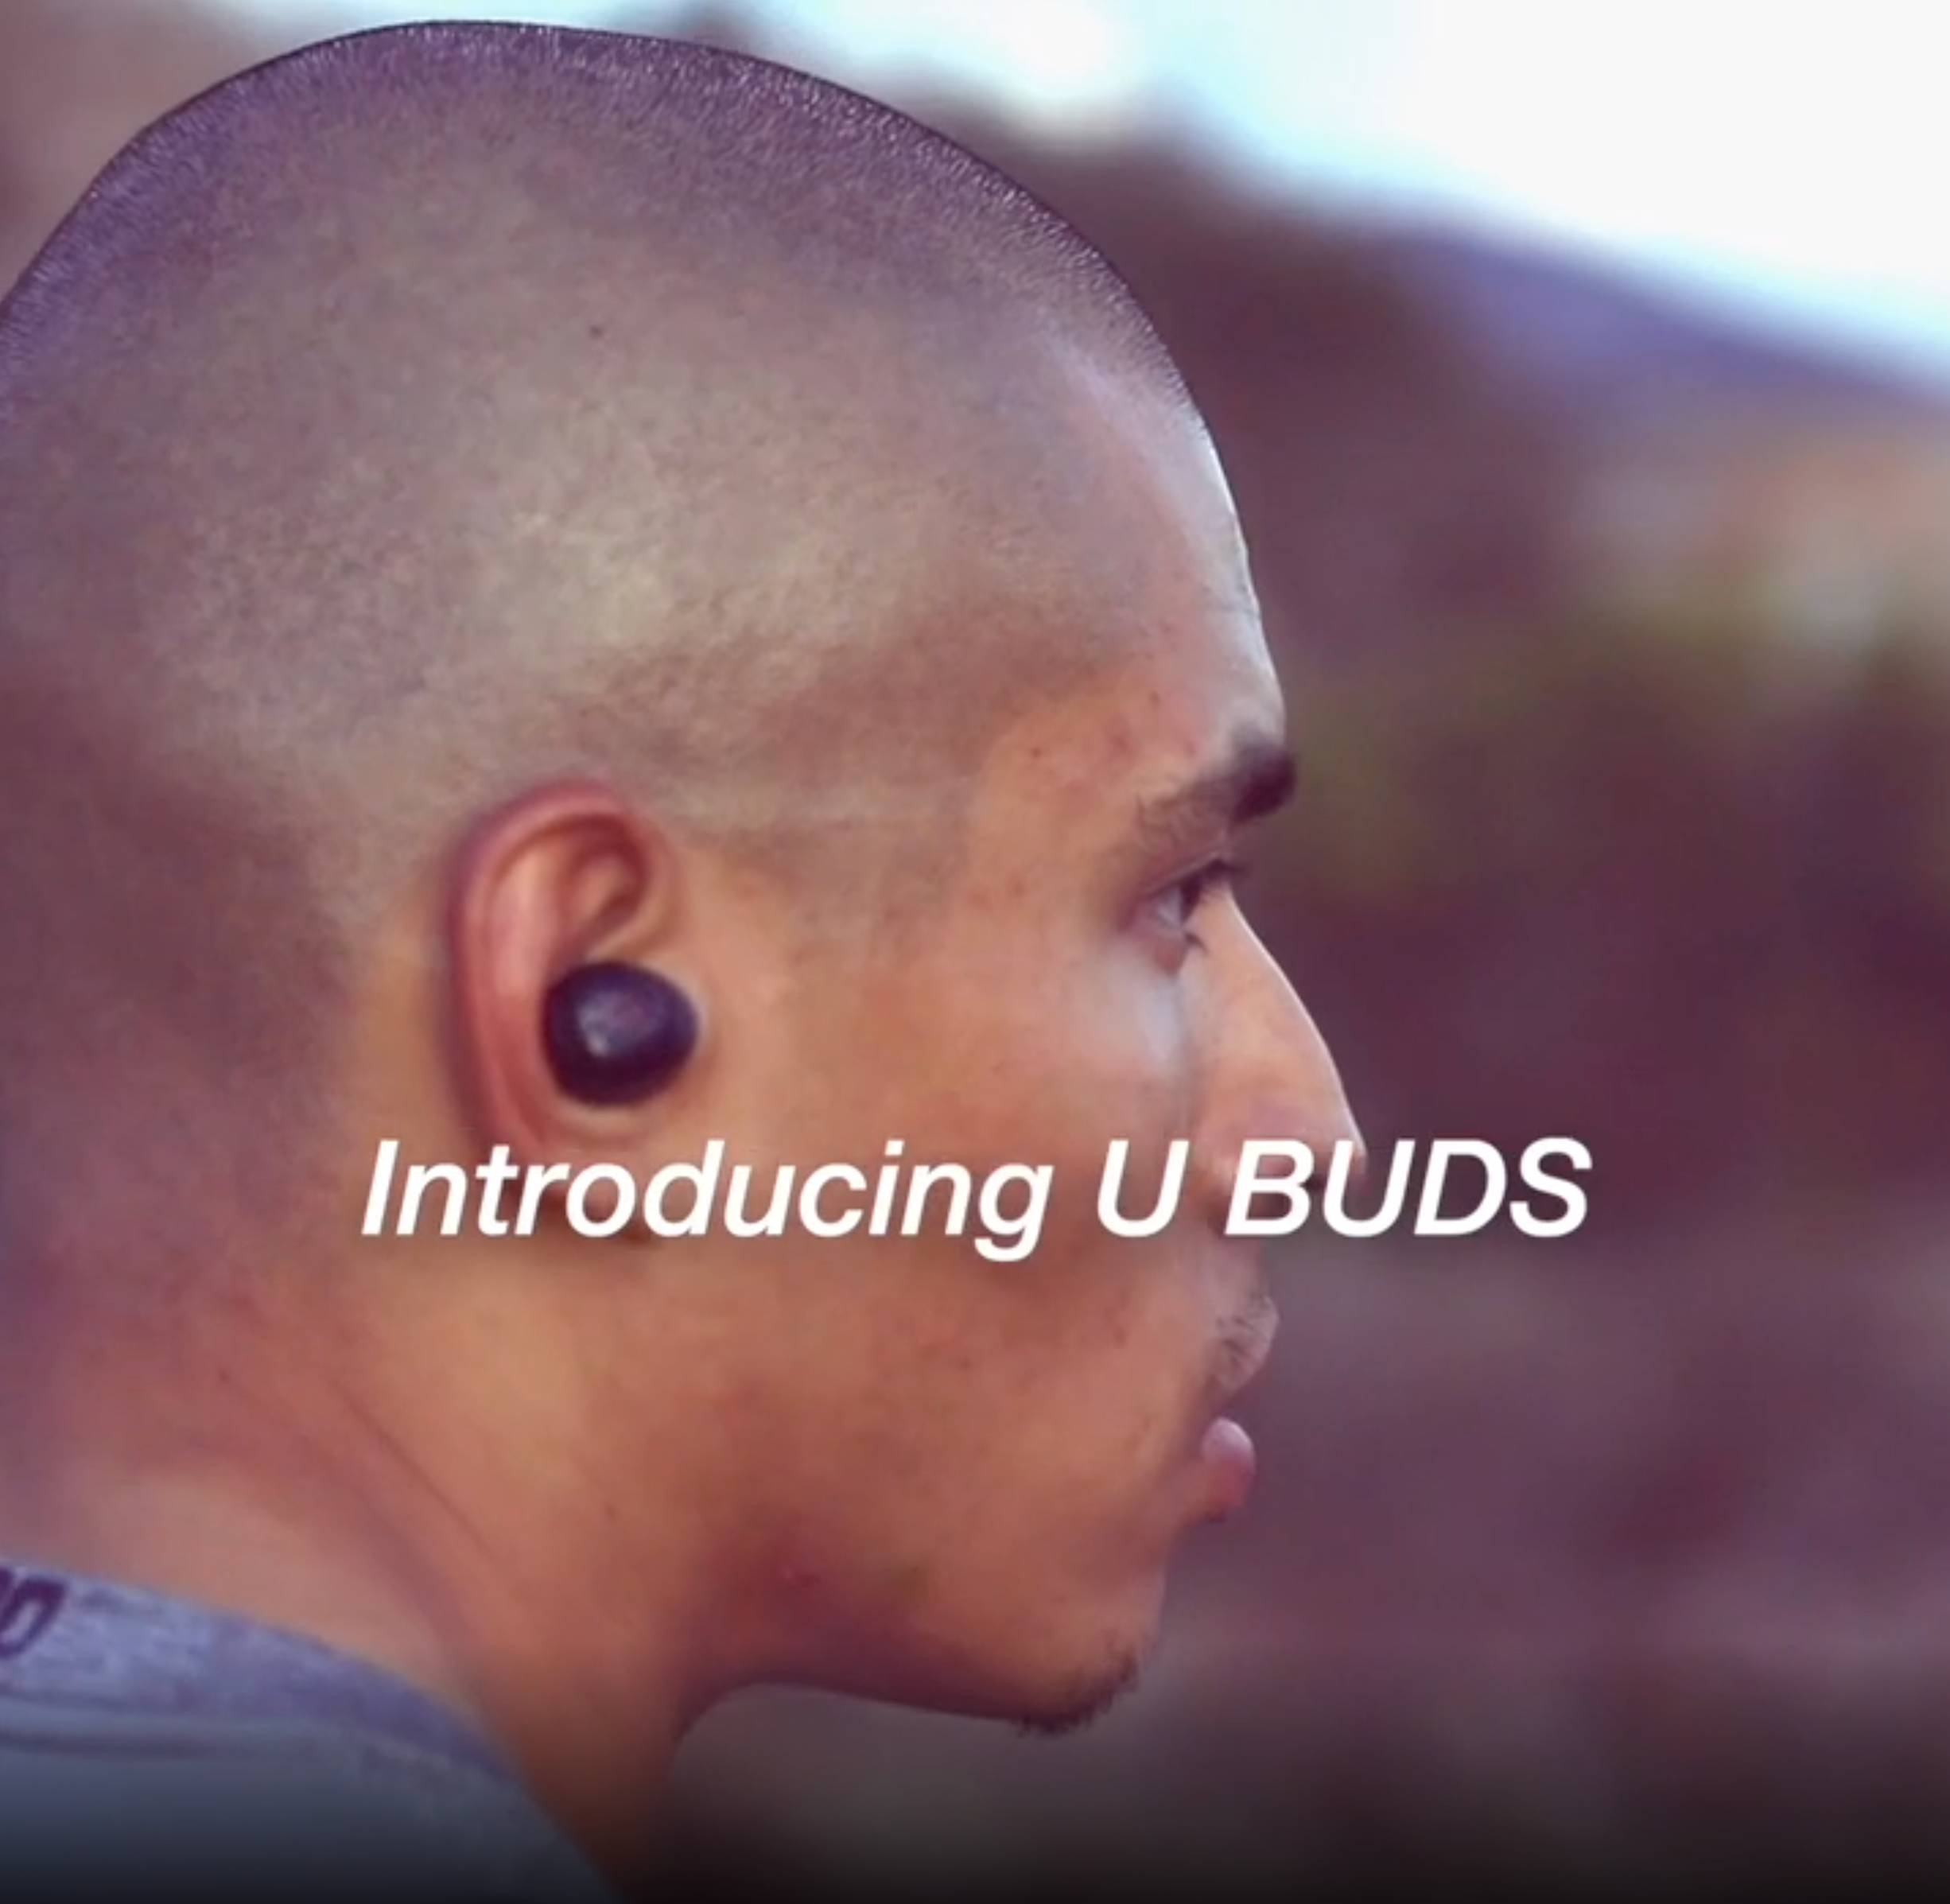 U BUDS SUMMIT wireless earbuds